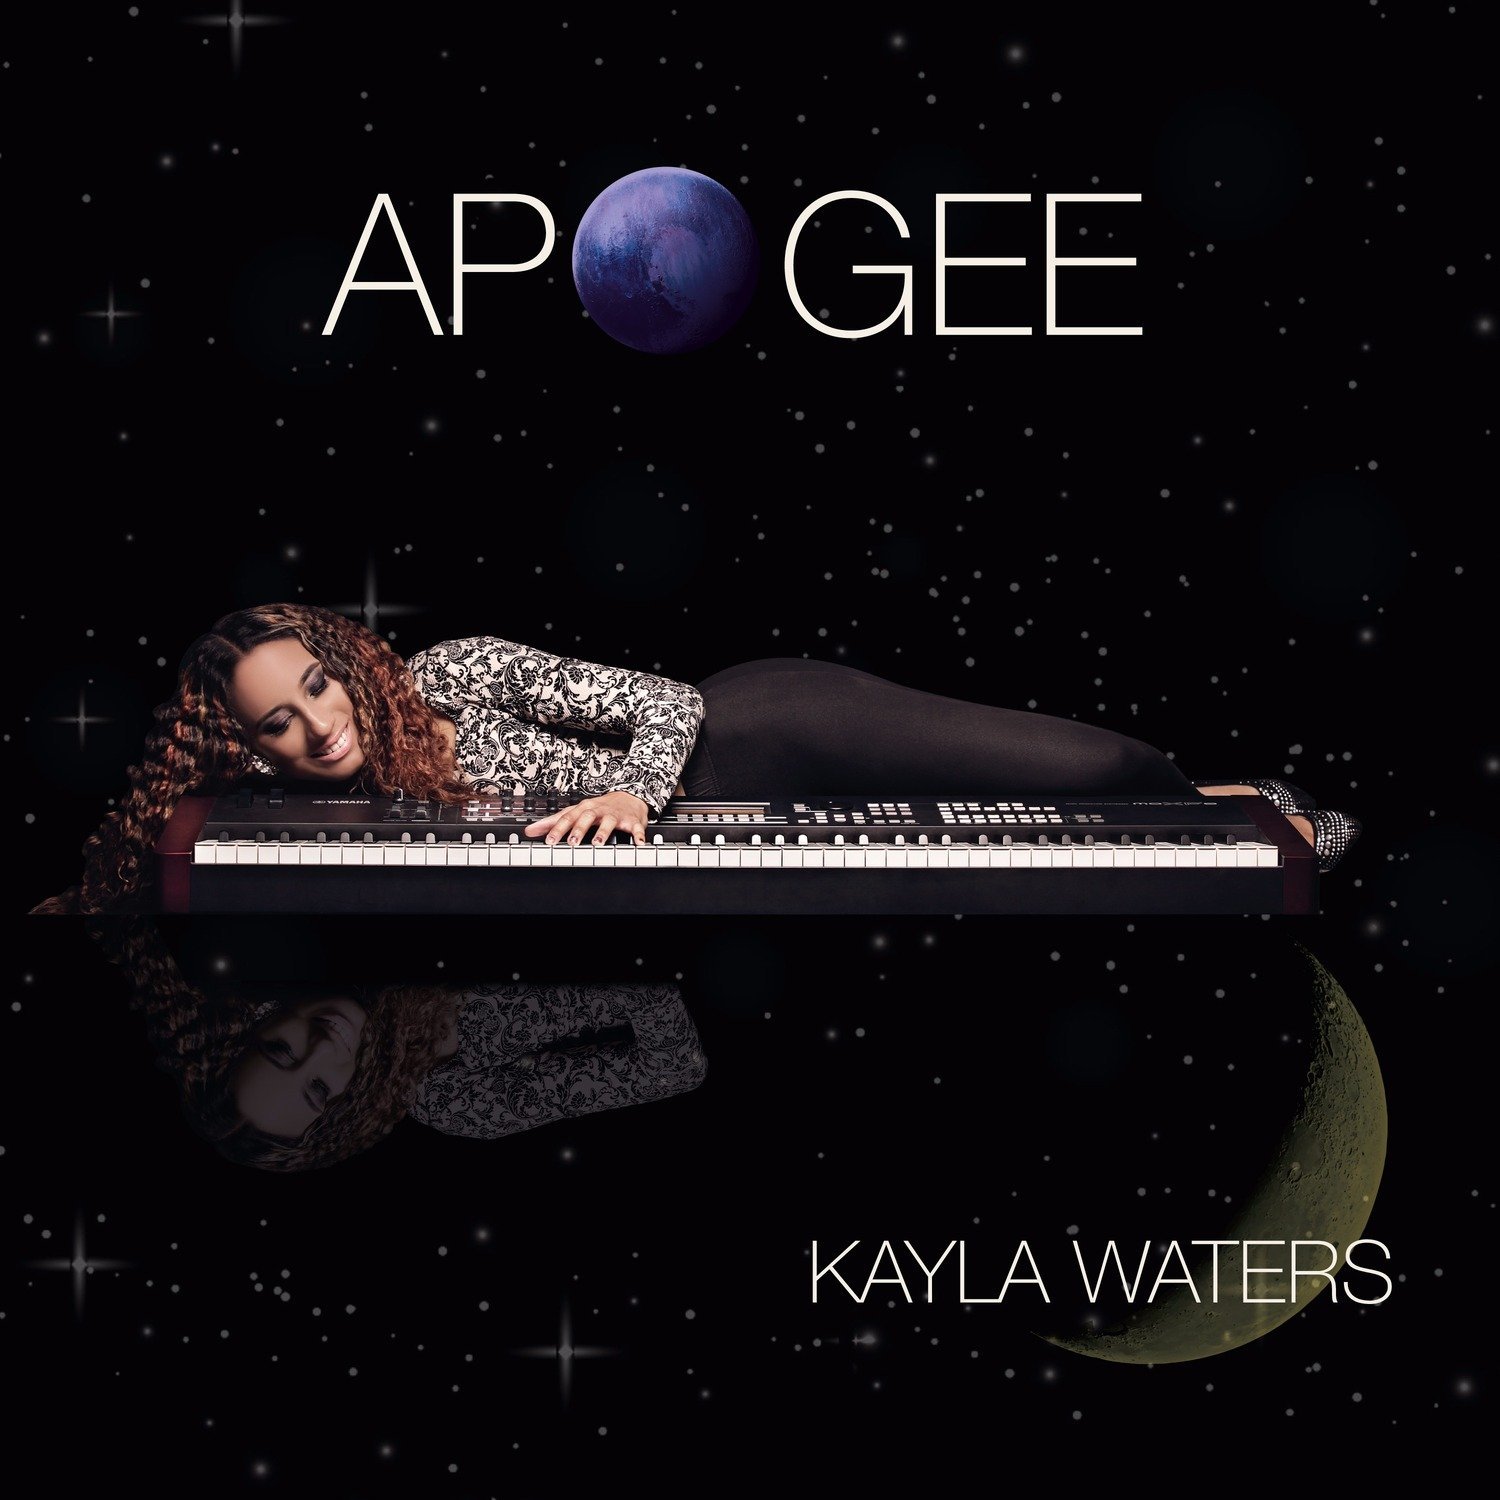 KAYLA WATERS - Apogee cover 